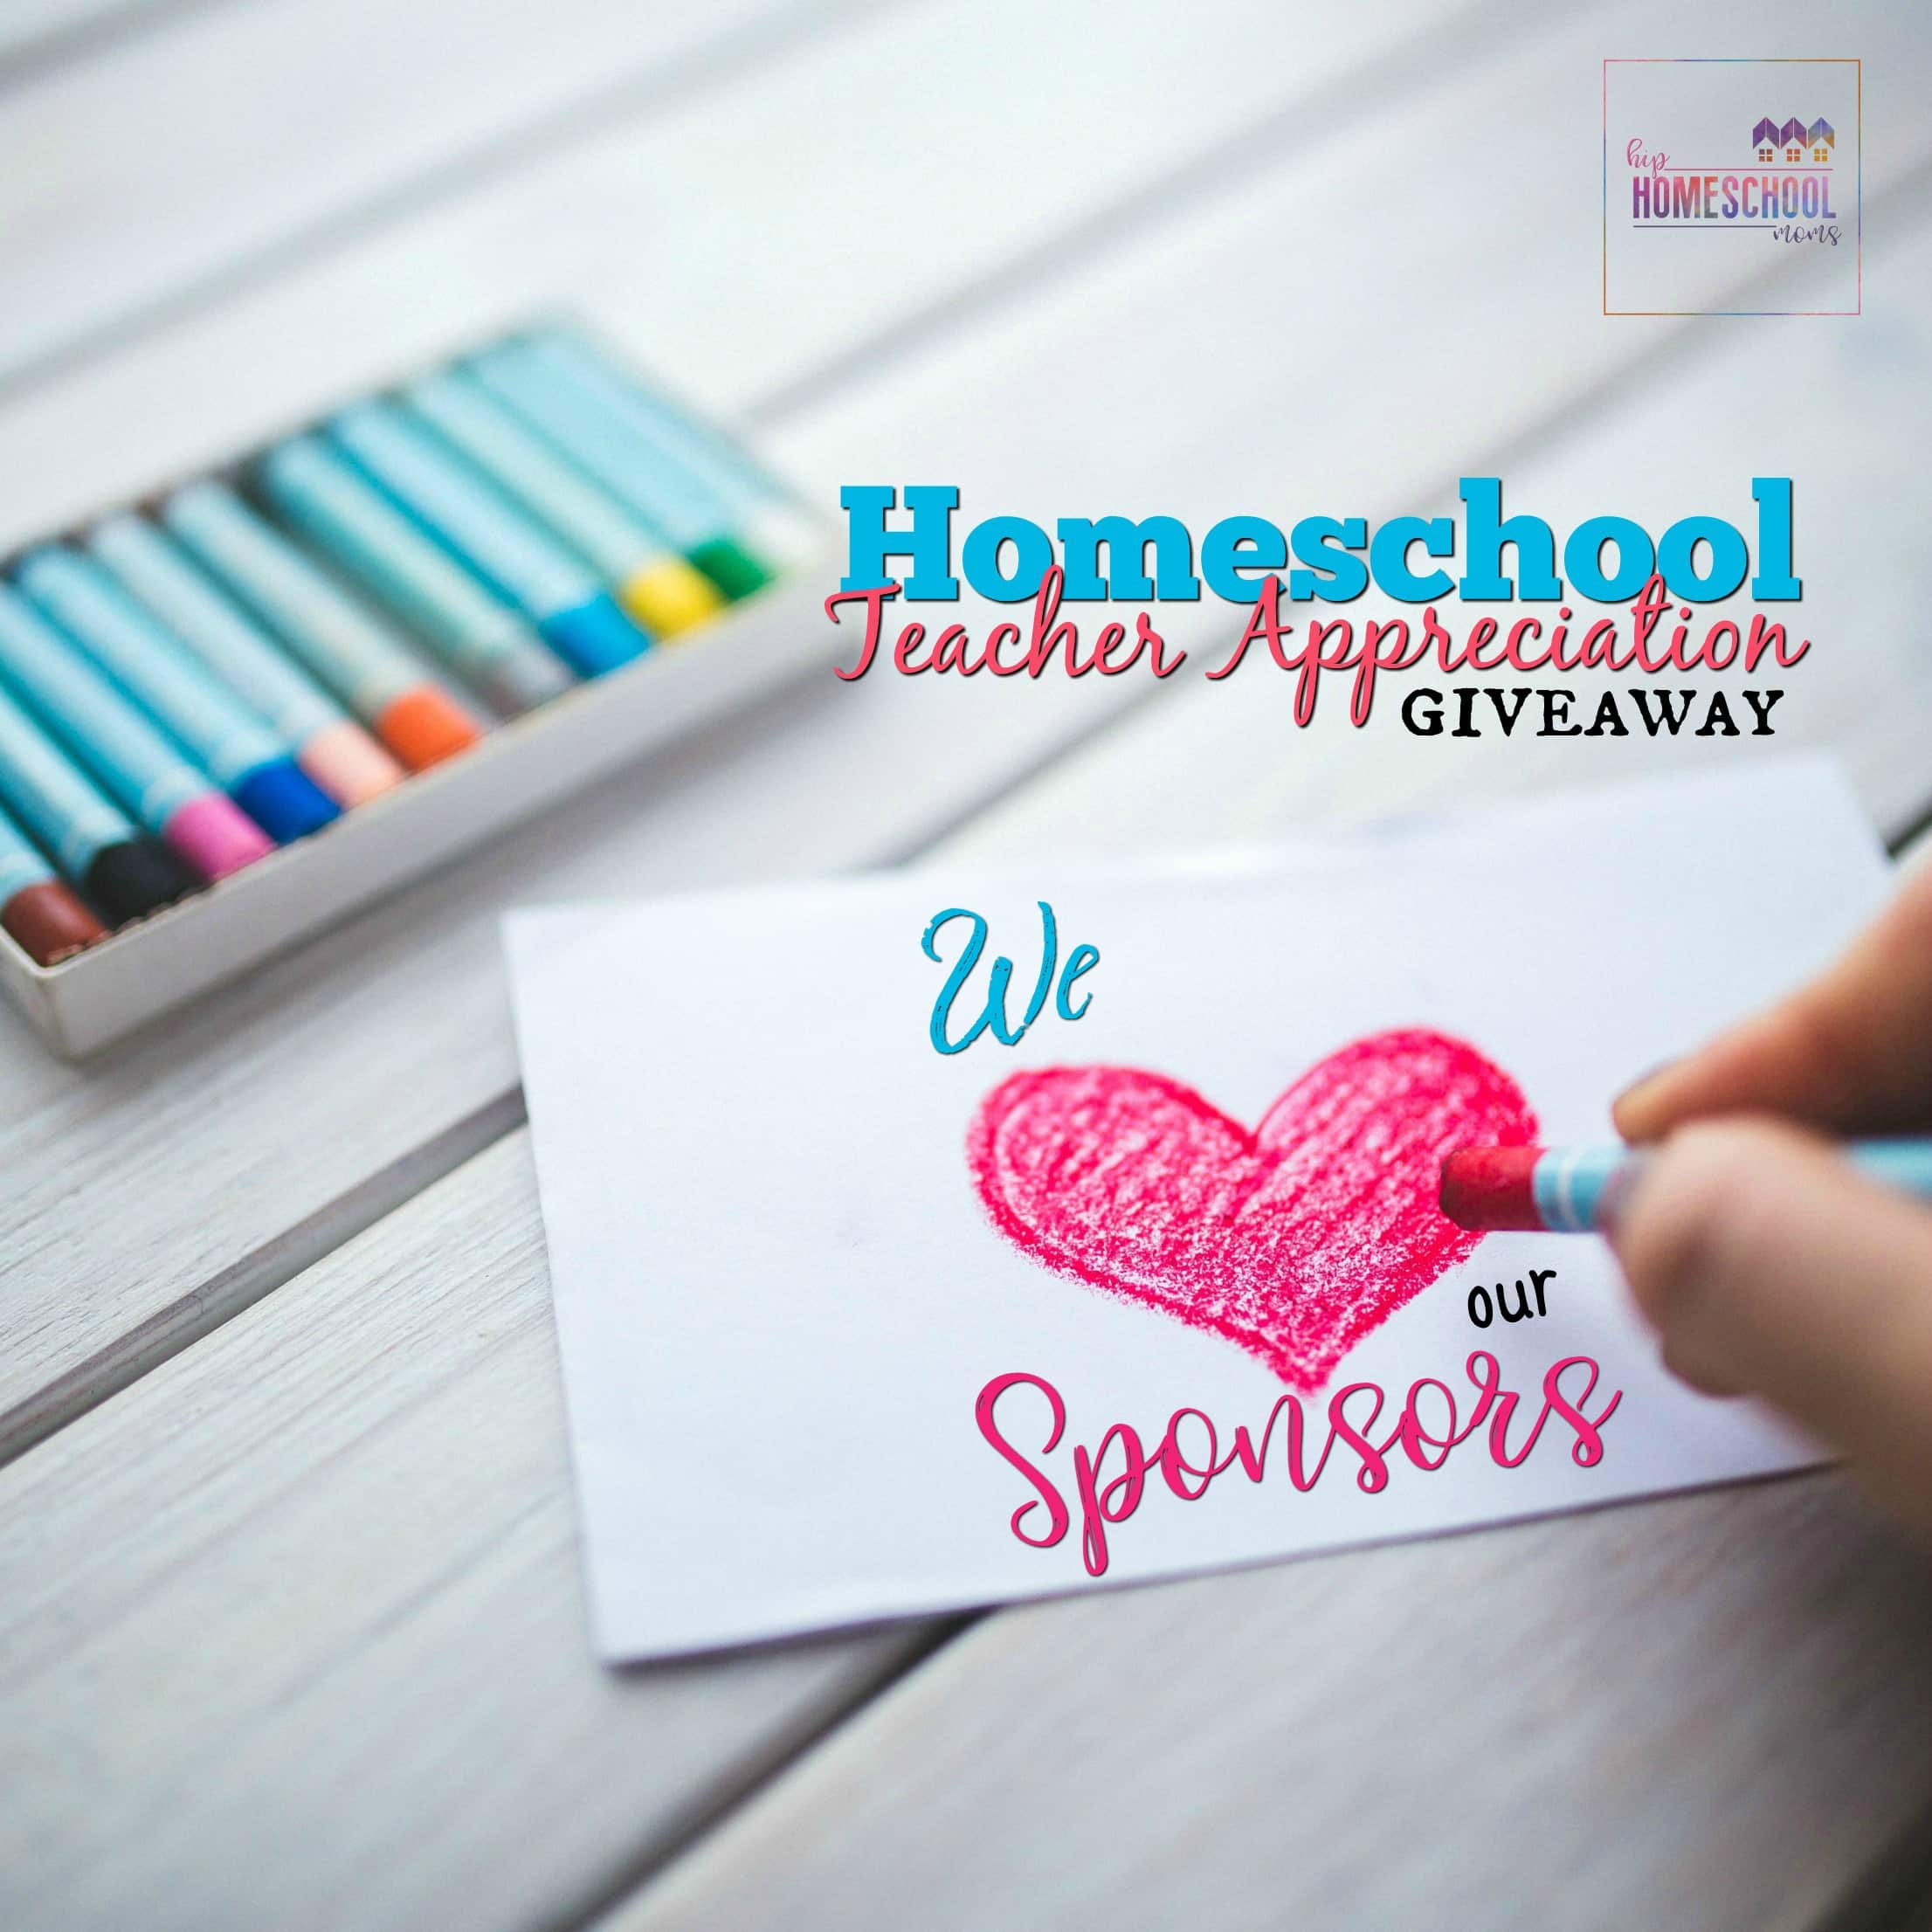 2017 Homeschool Teacher Appreciation Giveaway Sponsors